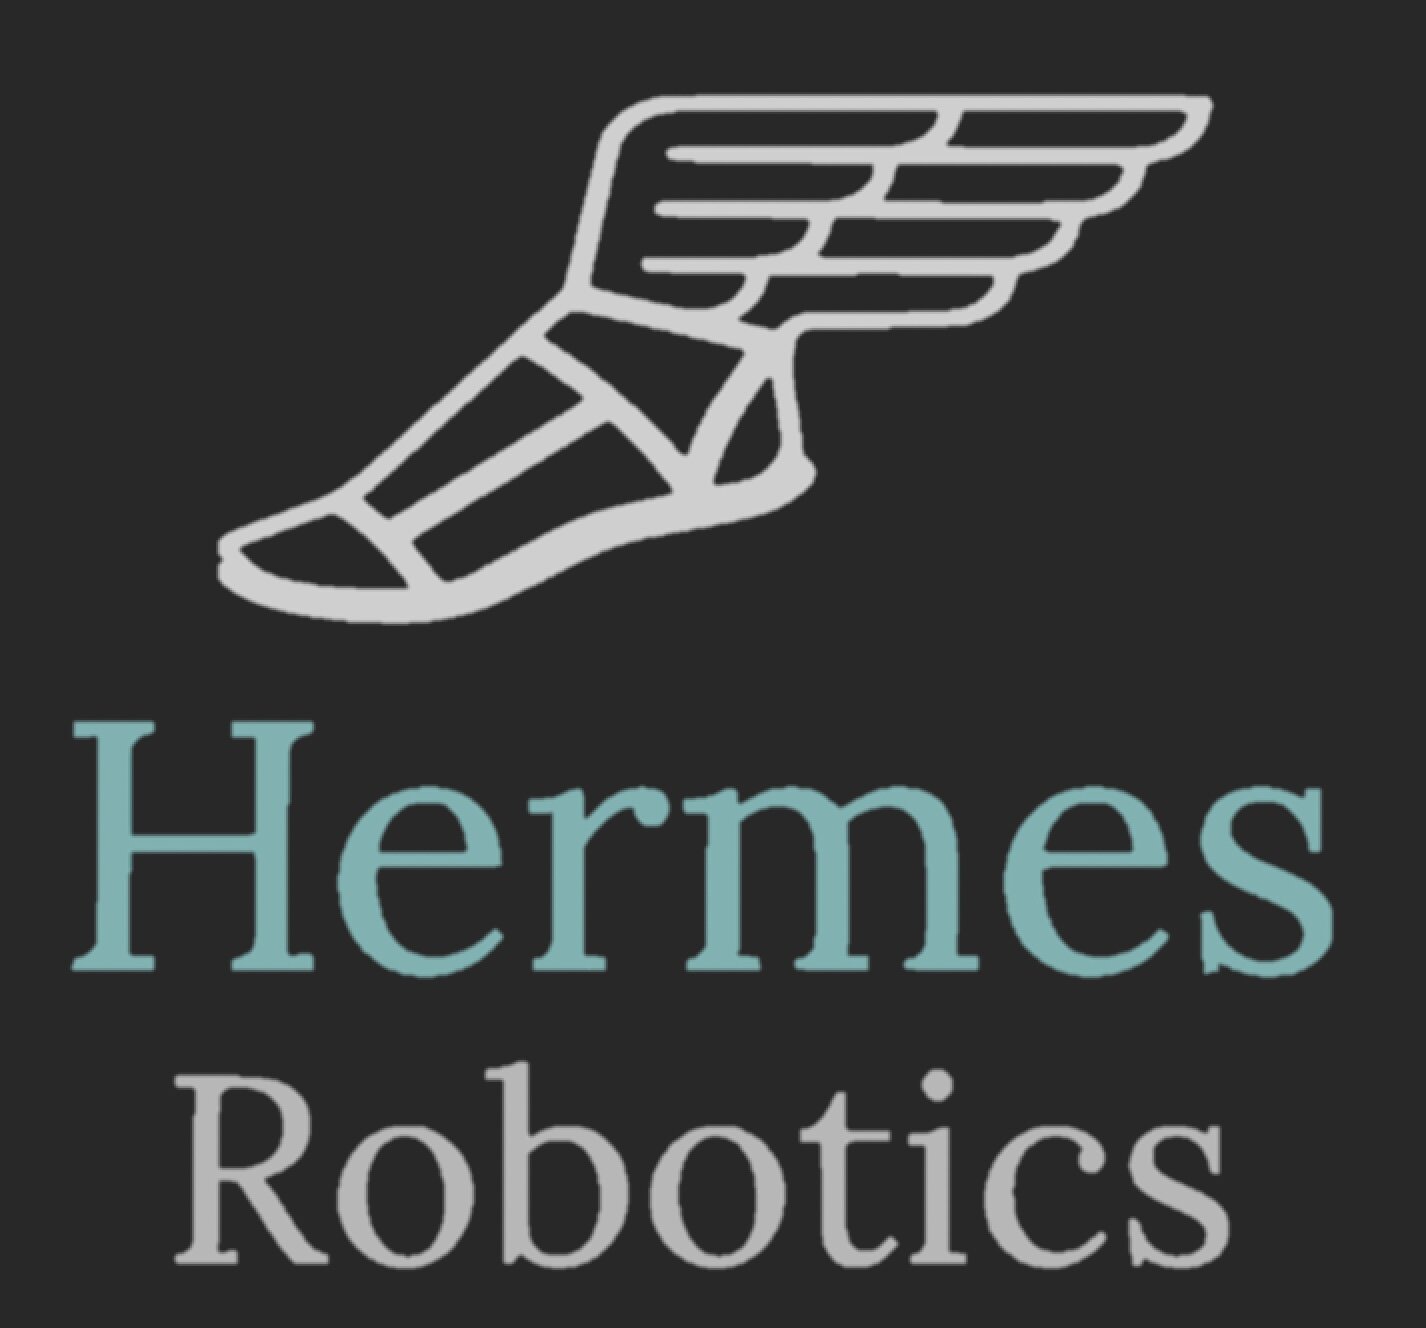 Hermes Robotics logo.jpg